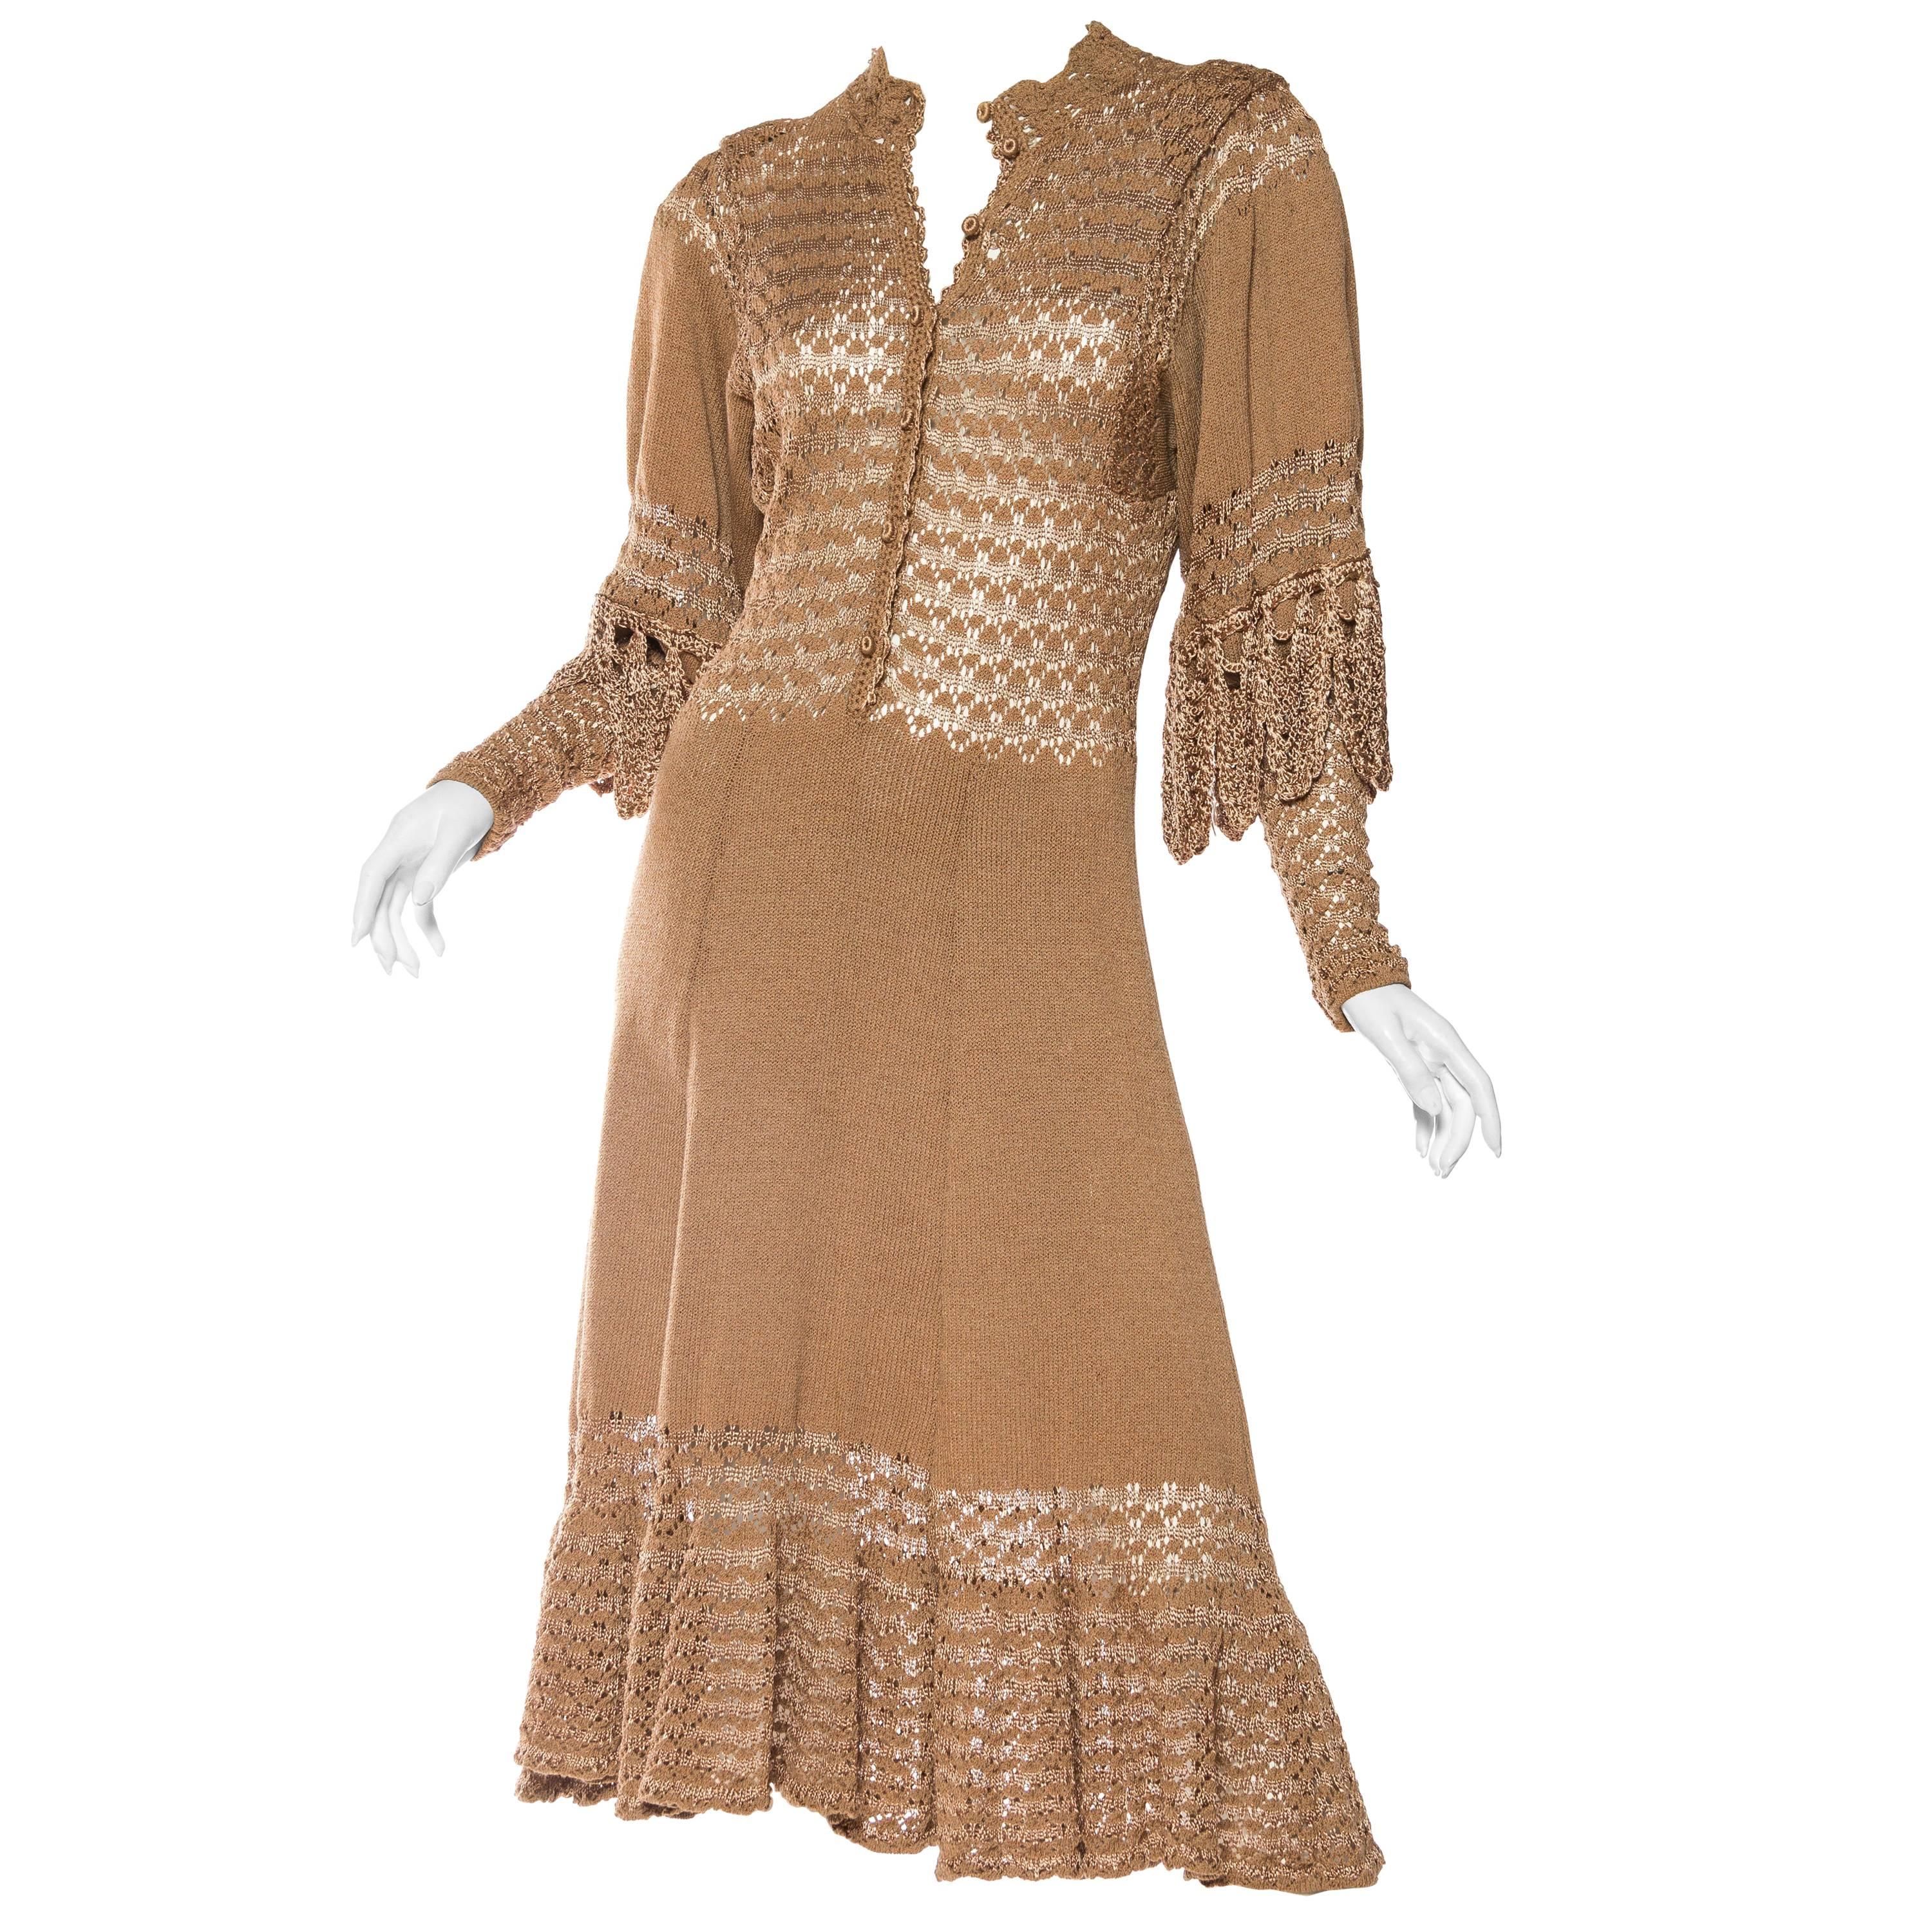 1970s Victorian Revival Knit Dress